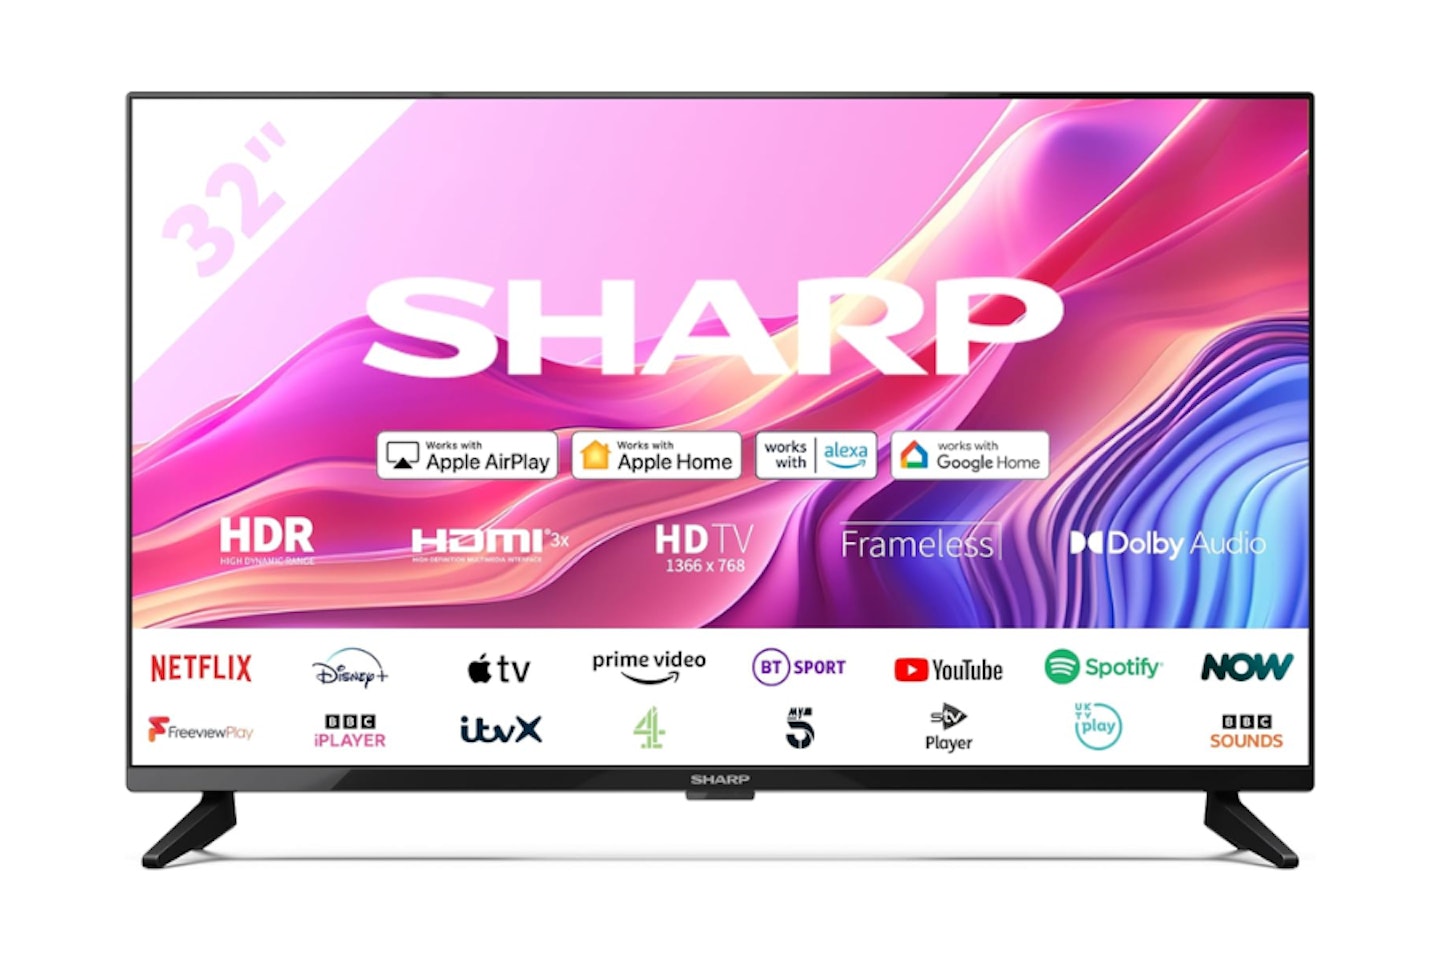 SHARP 32FD6K 32-Inch HD Ready Smart Roku TV